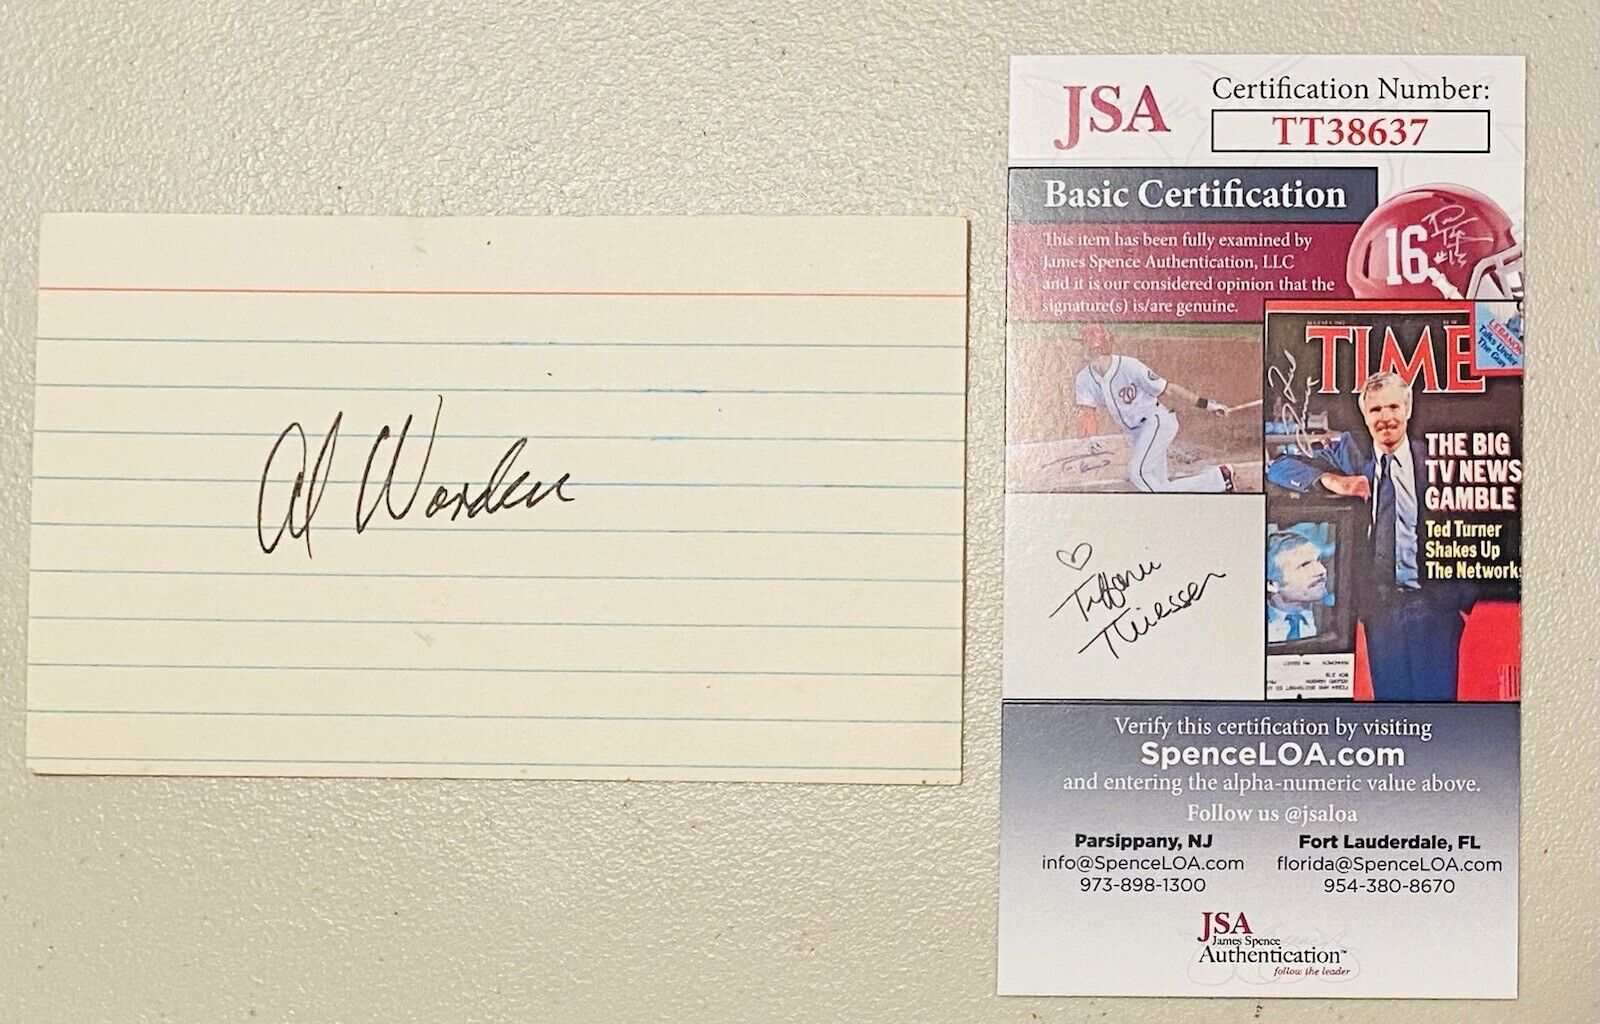 Al Worden Signed Autographed 3x5 Card JSA NASA Apollo 15 Astronaut